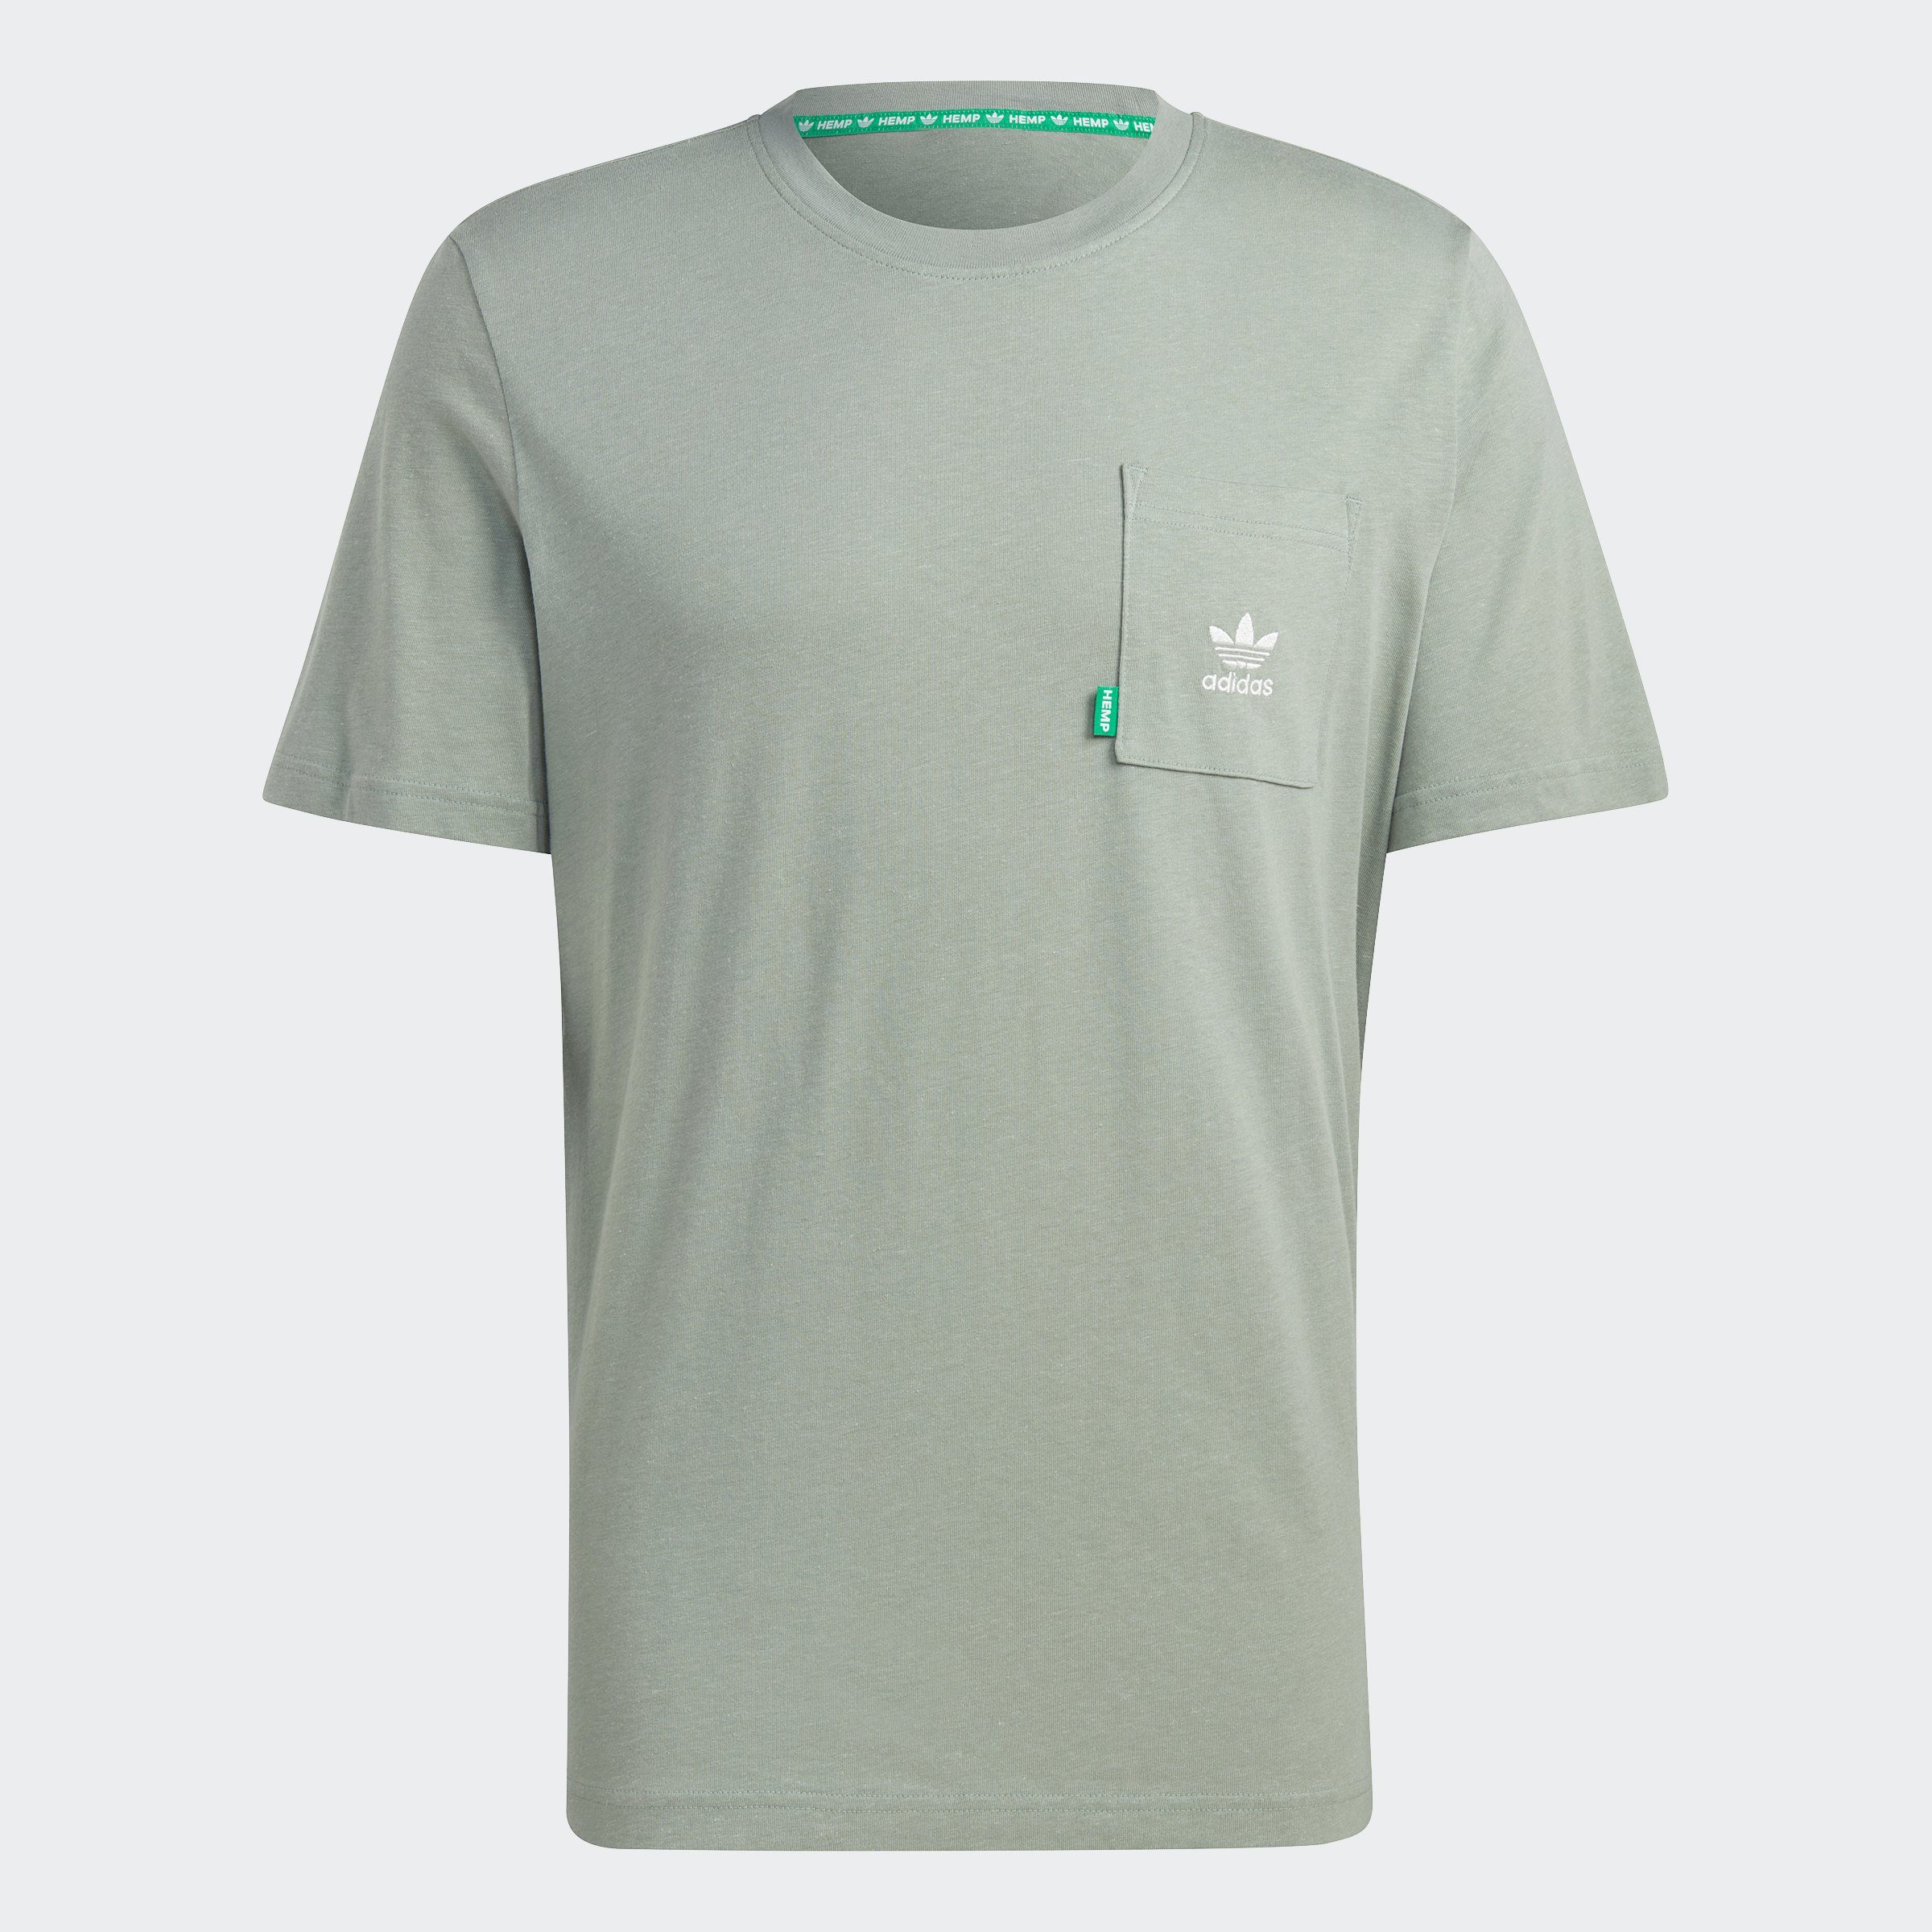 Originals MADE Silver ESSENTIALS+ adidas HEMP Green WITH T-Shirt